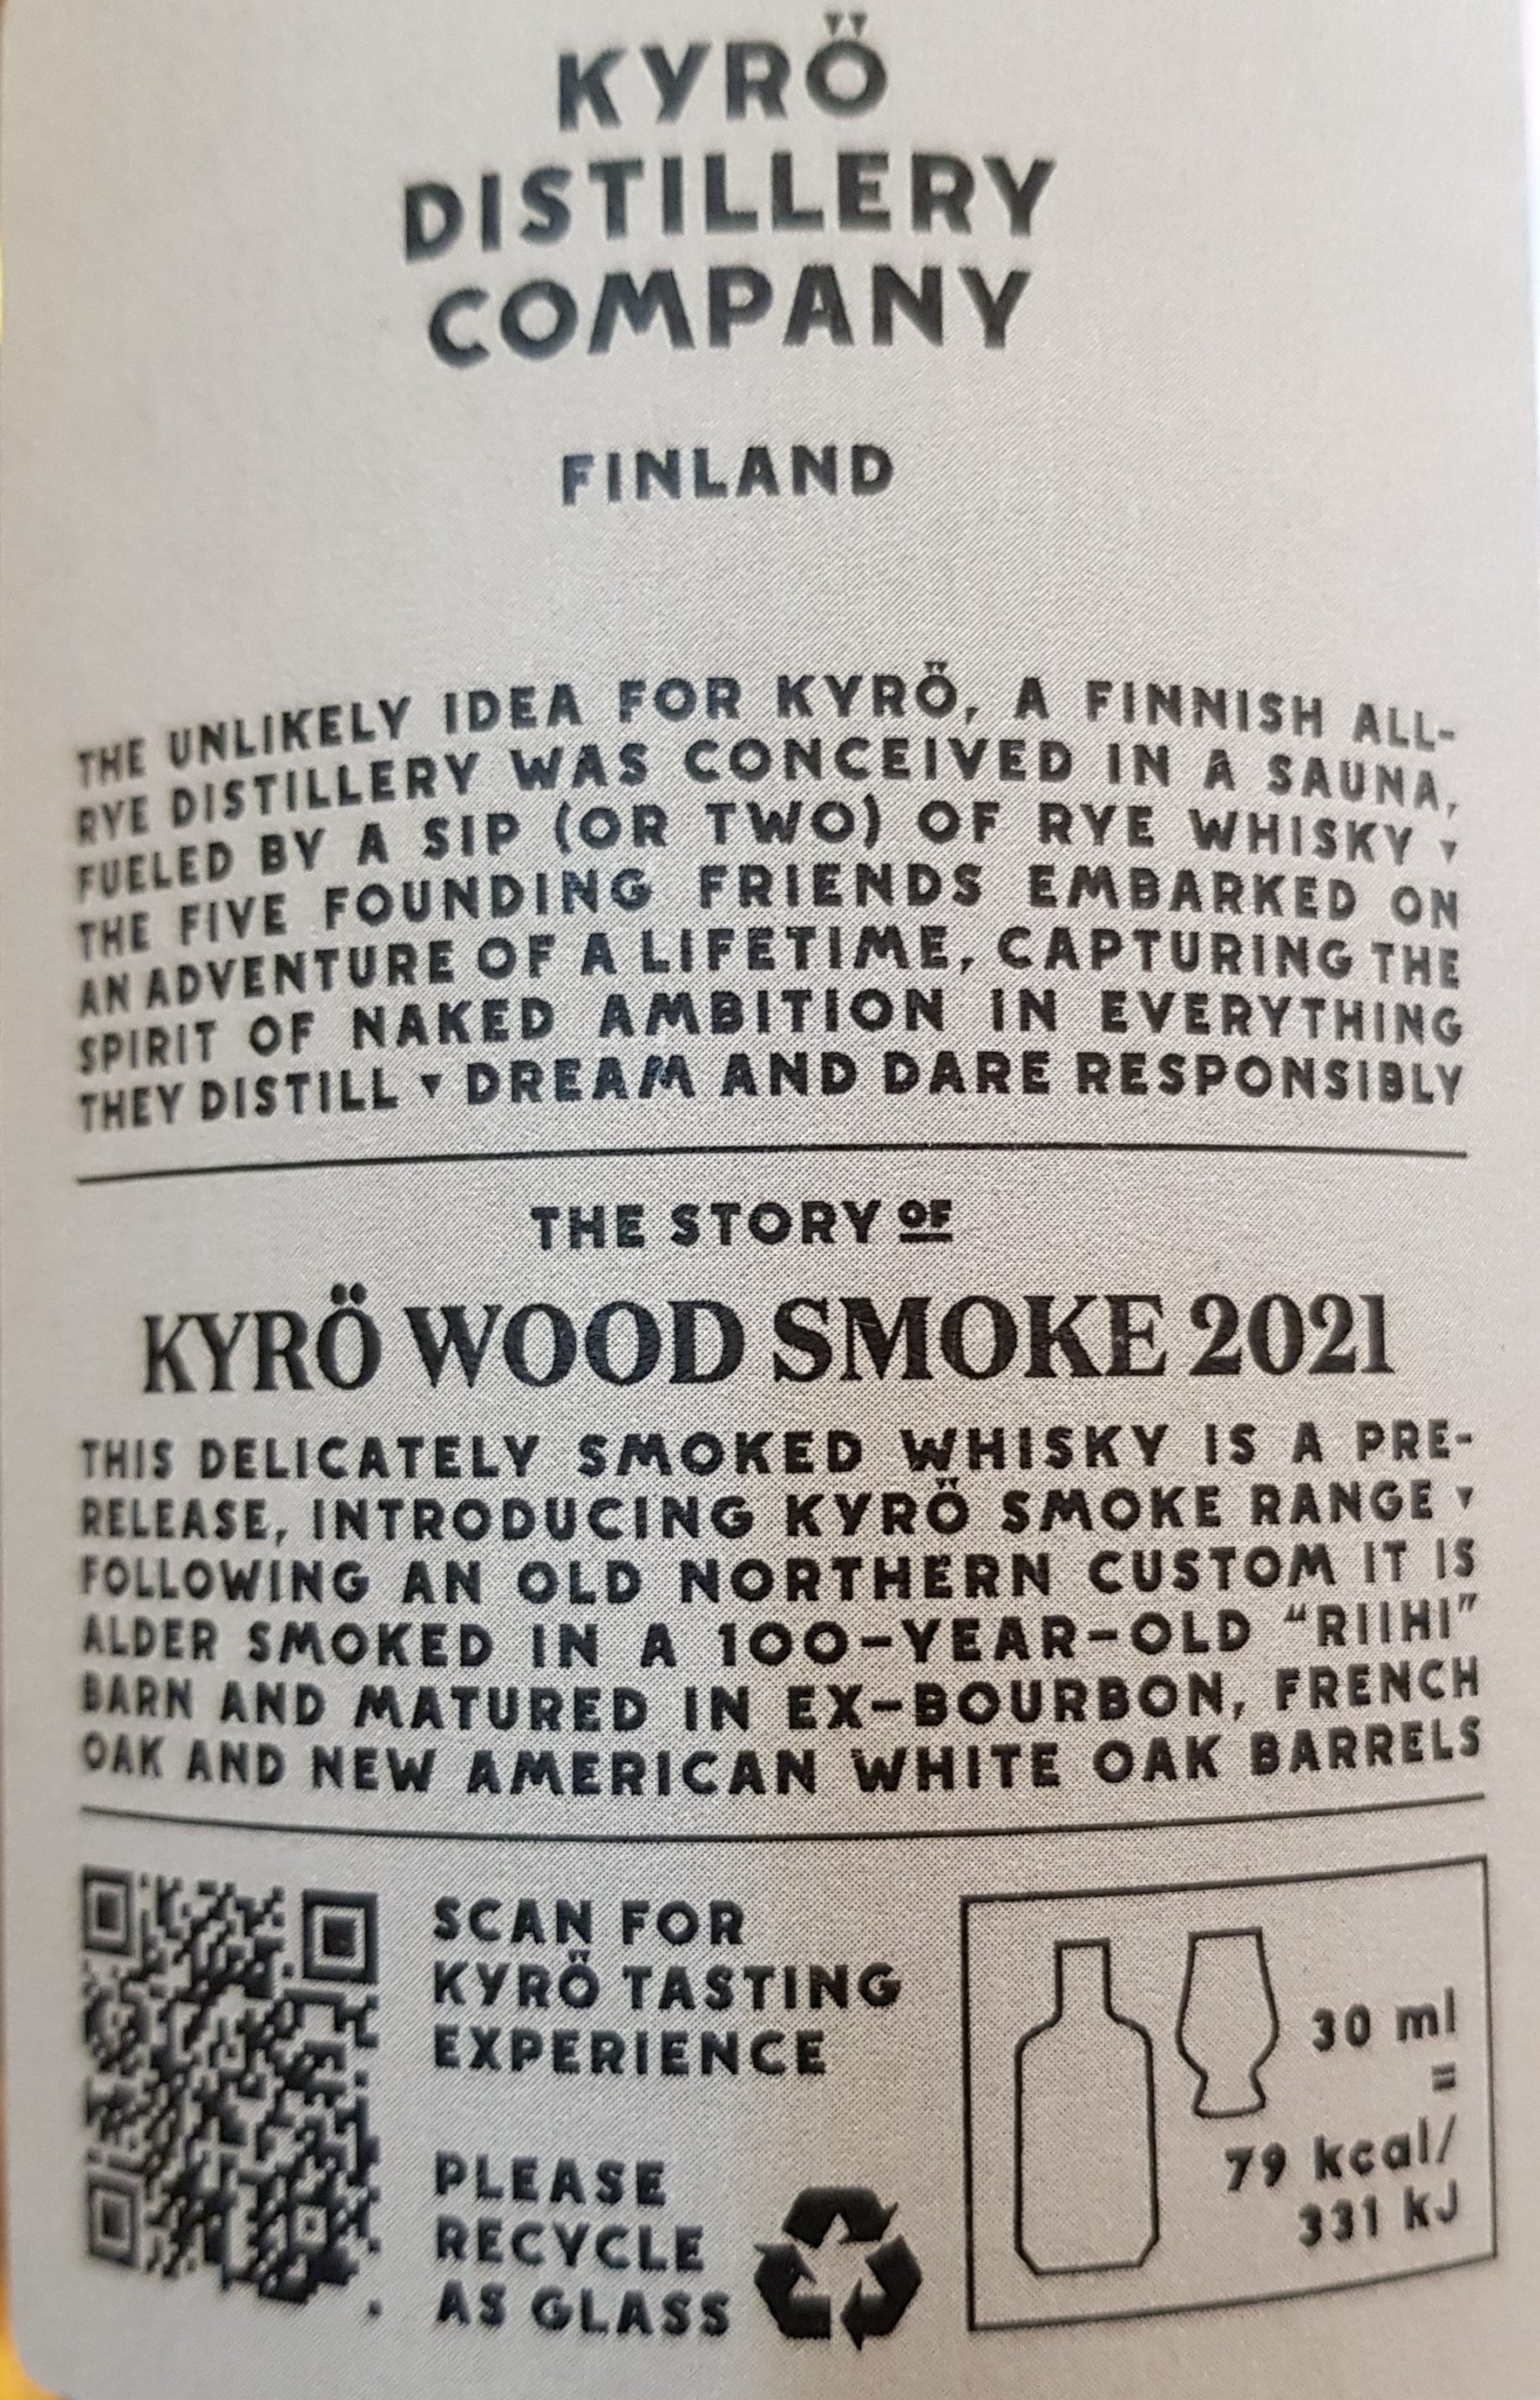 Kyrö Woodsmoke Malt Rye Whisky 47,2% – Postert Whisky – Spirituosenhandel  Köln rechtsrheinisch – Whisky, Rum und